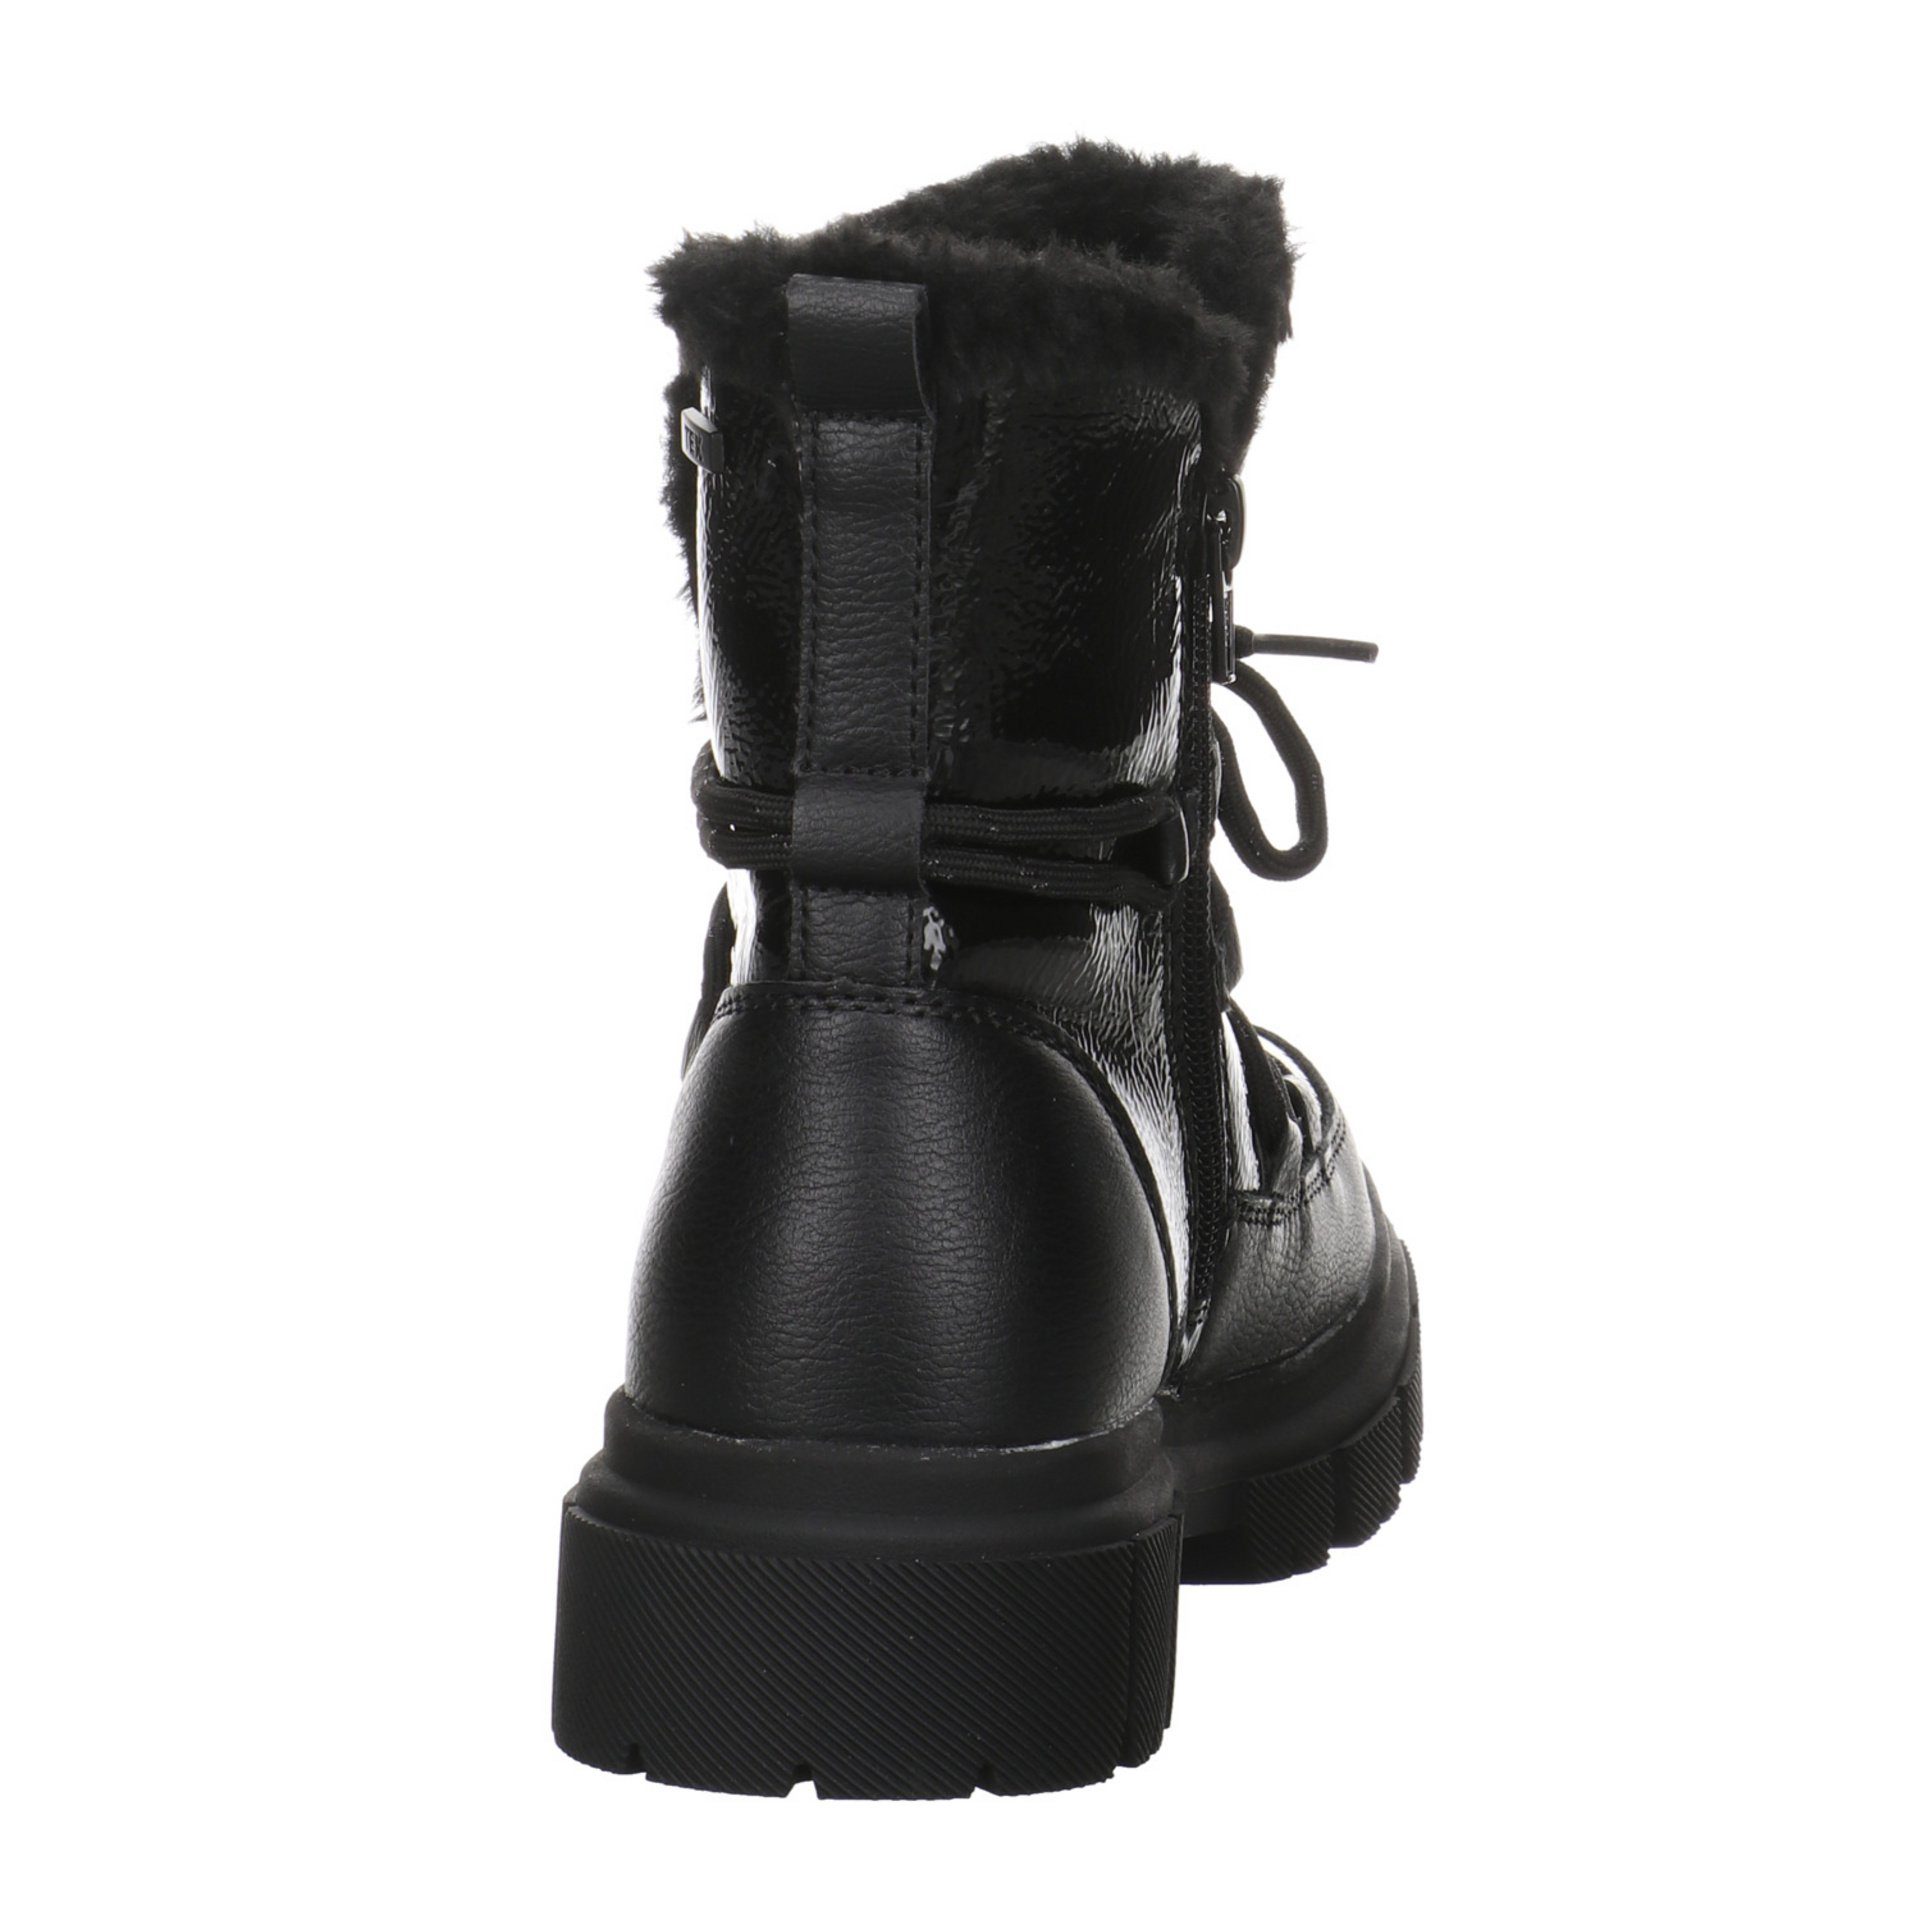 Stiefelette black Stiefel Kinderschuhe Schuhe Synthetikkombination TAILOR TOM Mädchen Boots